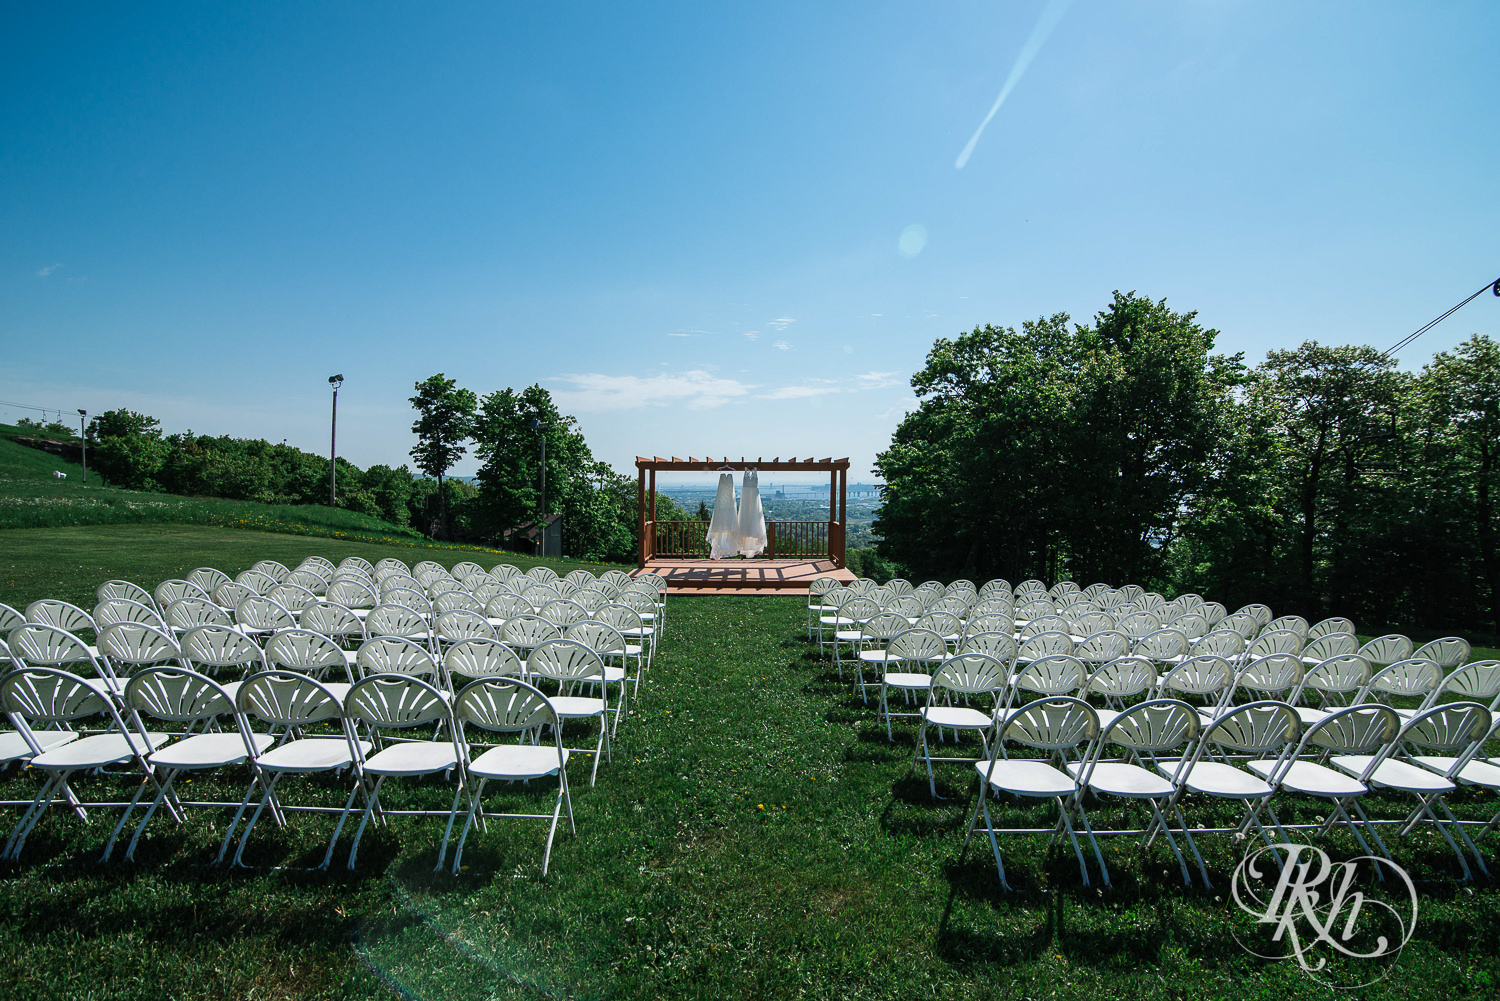 Outdoor summer wedding ceremony setup at Spirit Mountain in Duluth, Minnesota.